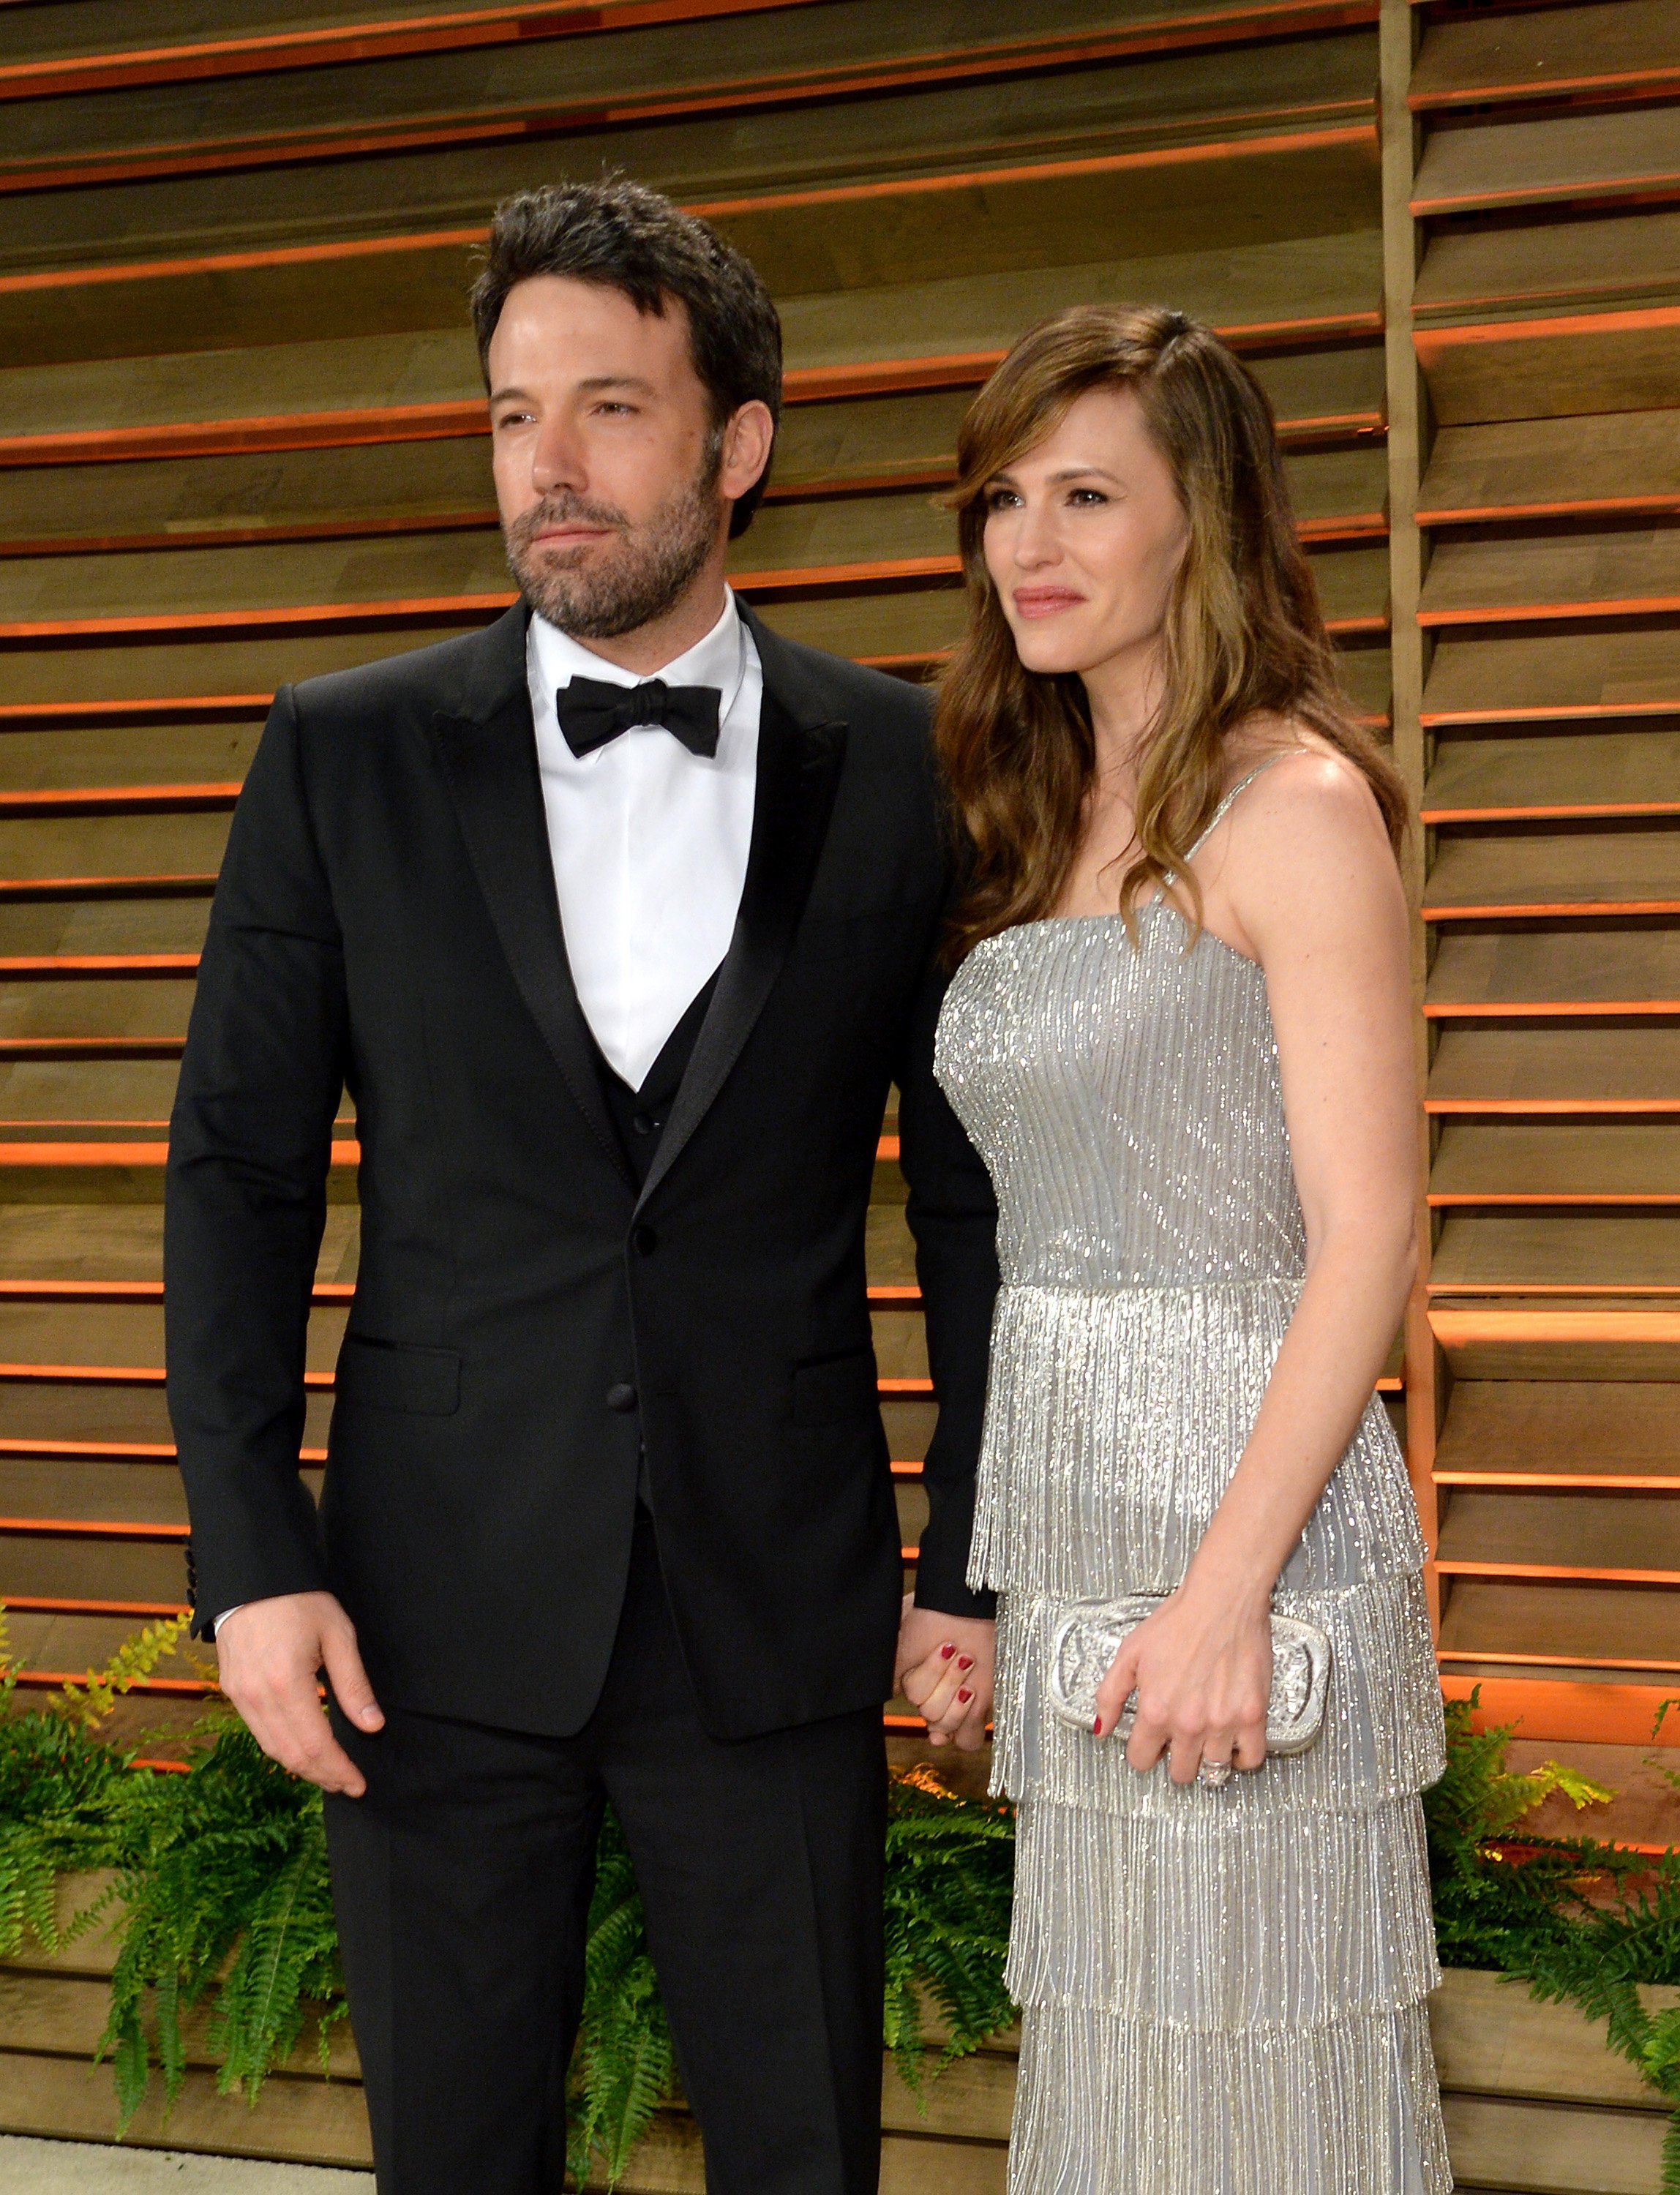 Ben Affleck and Jennifer Garner at the Vanity Fair Oscar party 2014. |Source: Getty Images